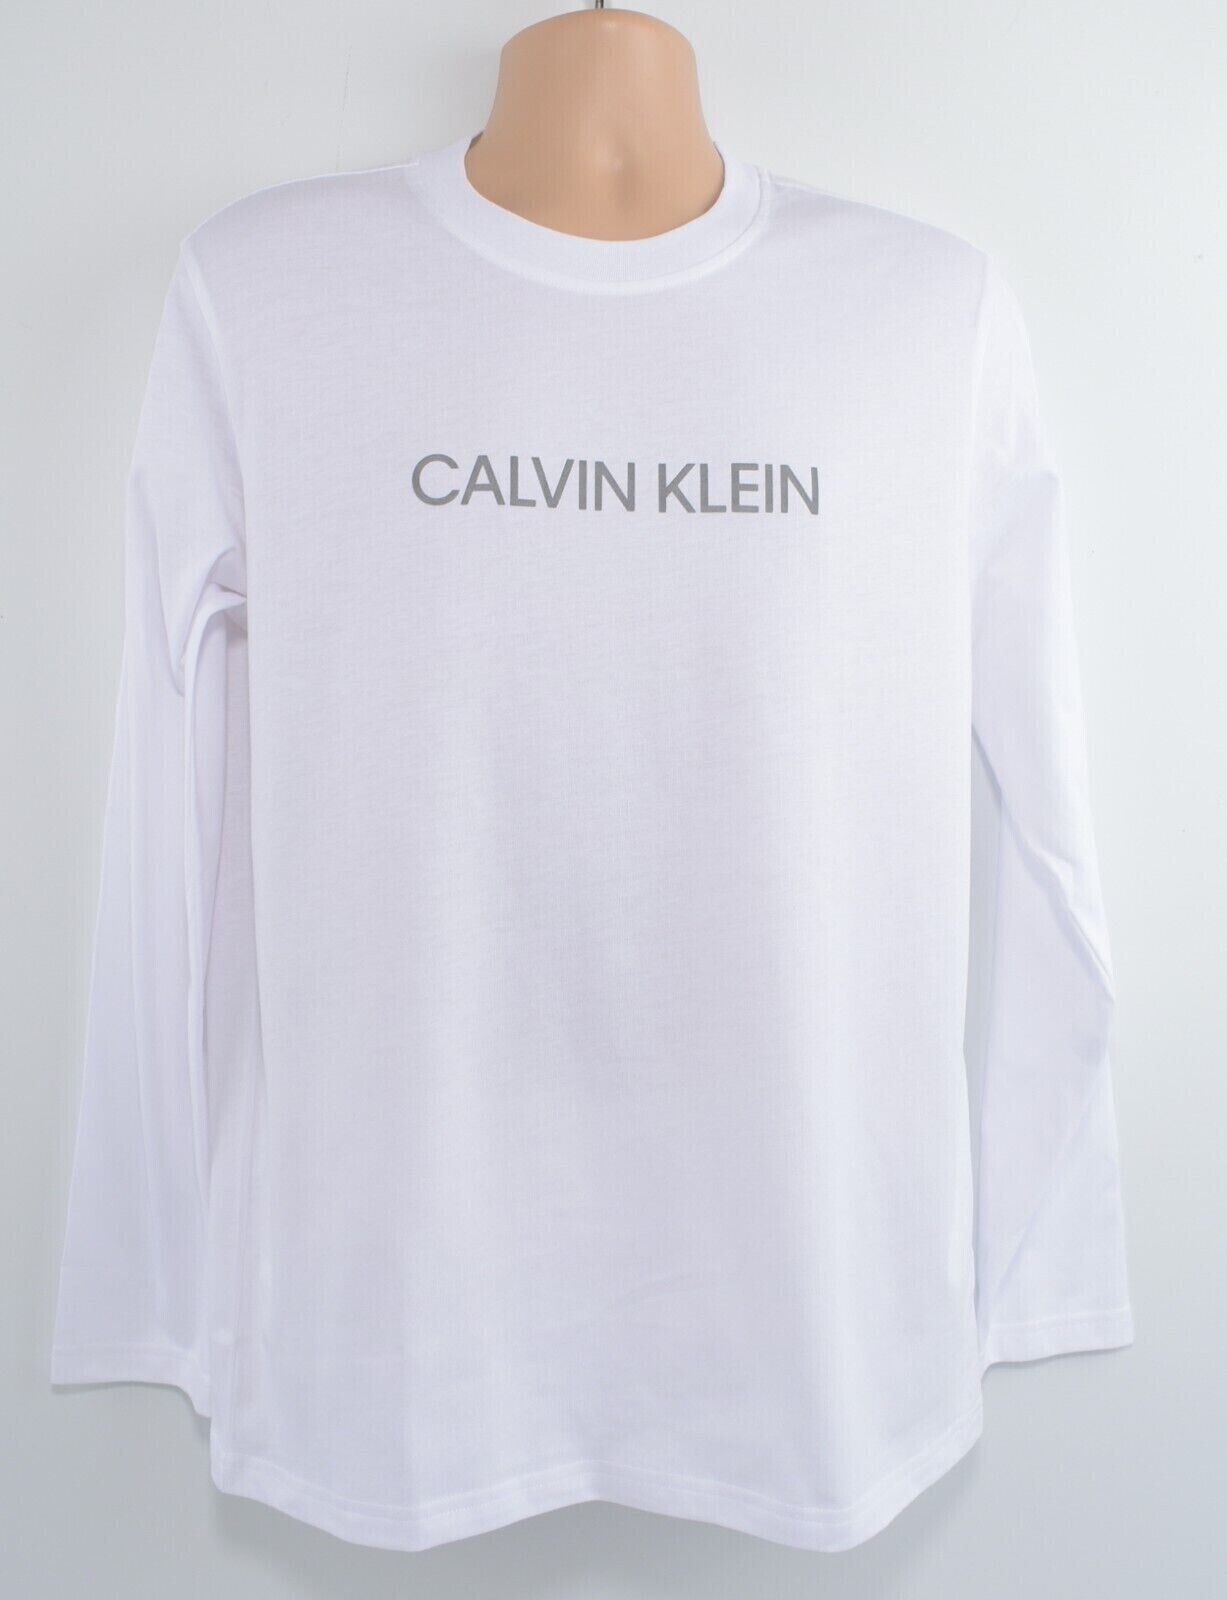 CALVIN KLEIN Performance Men's Long Sleeve T-shirt Top, Bright White, size S